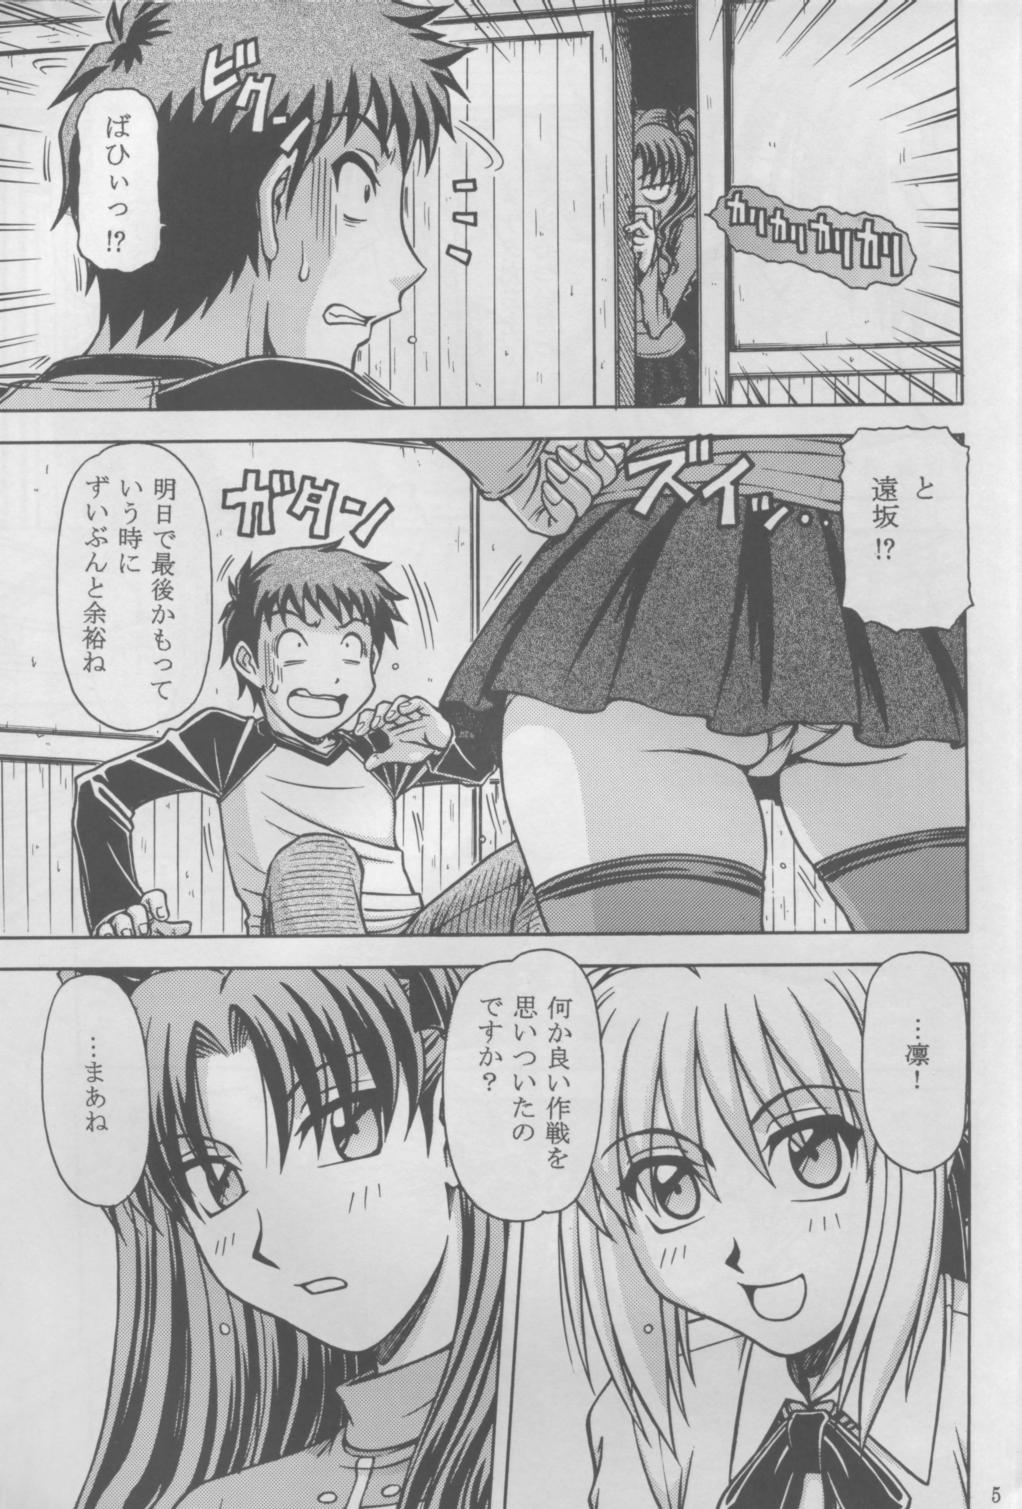 Blows Gekkan Mapodon 1 Gatsugou - Fate stay night High Heels - Page 5